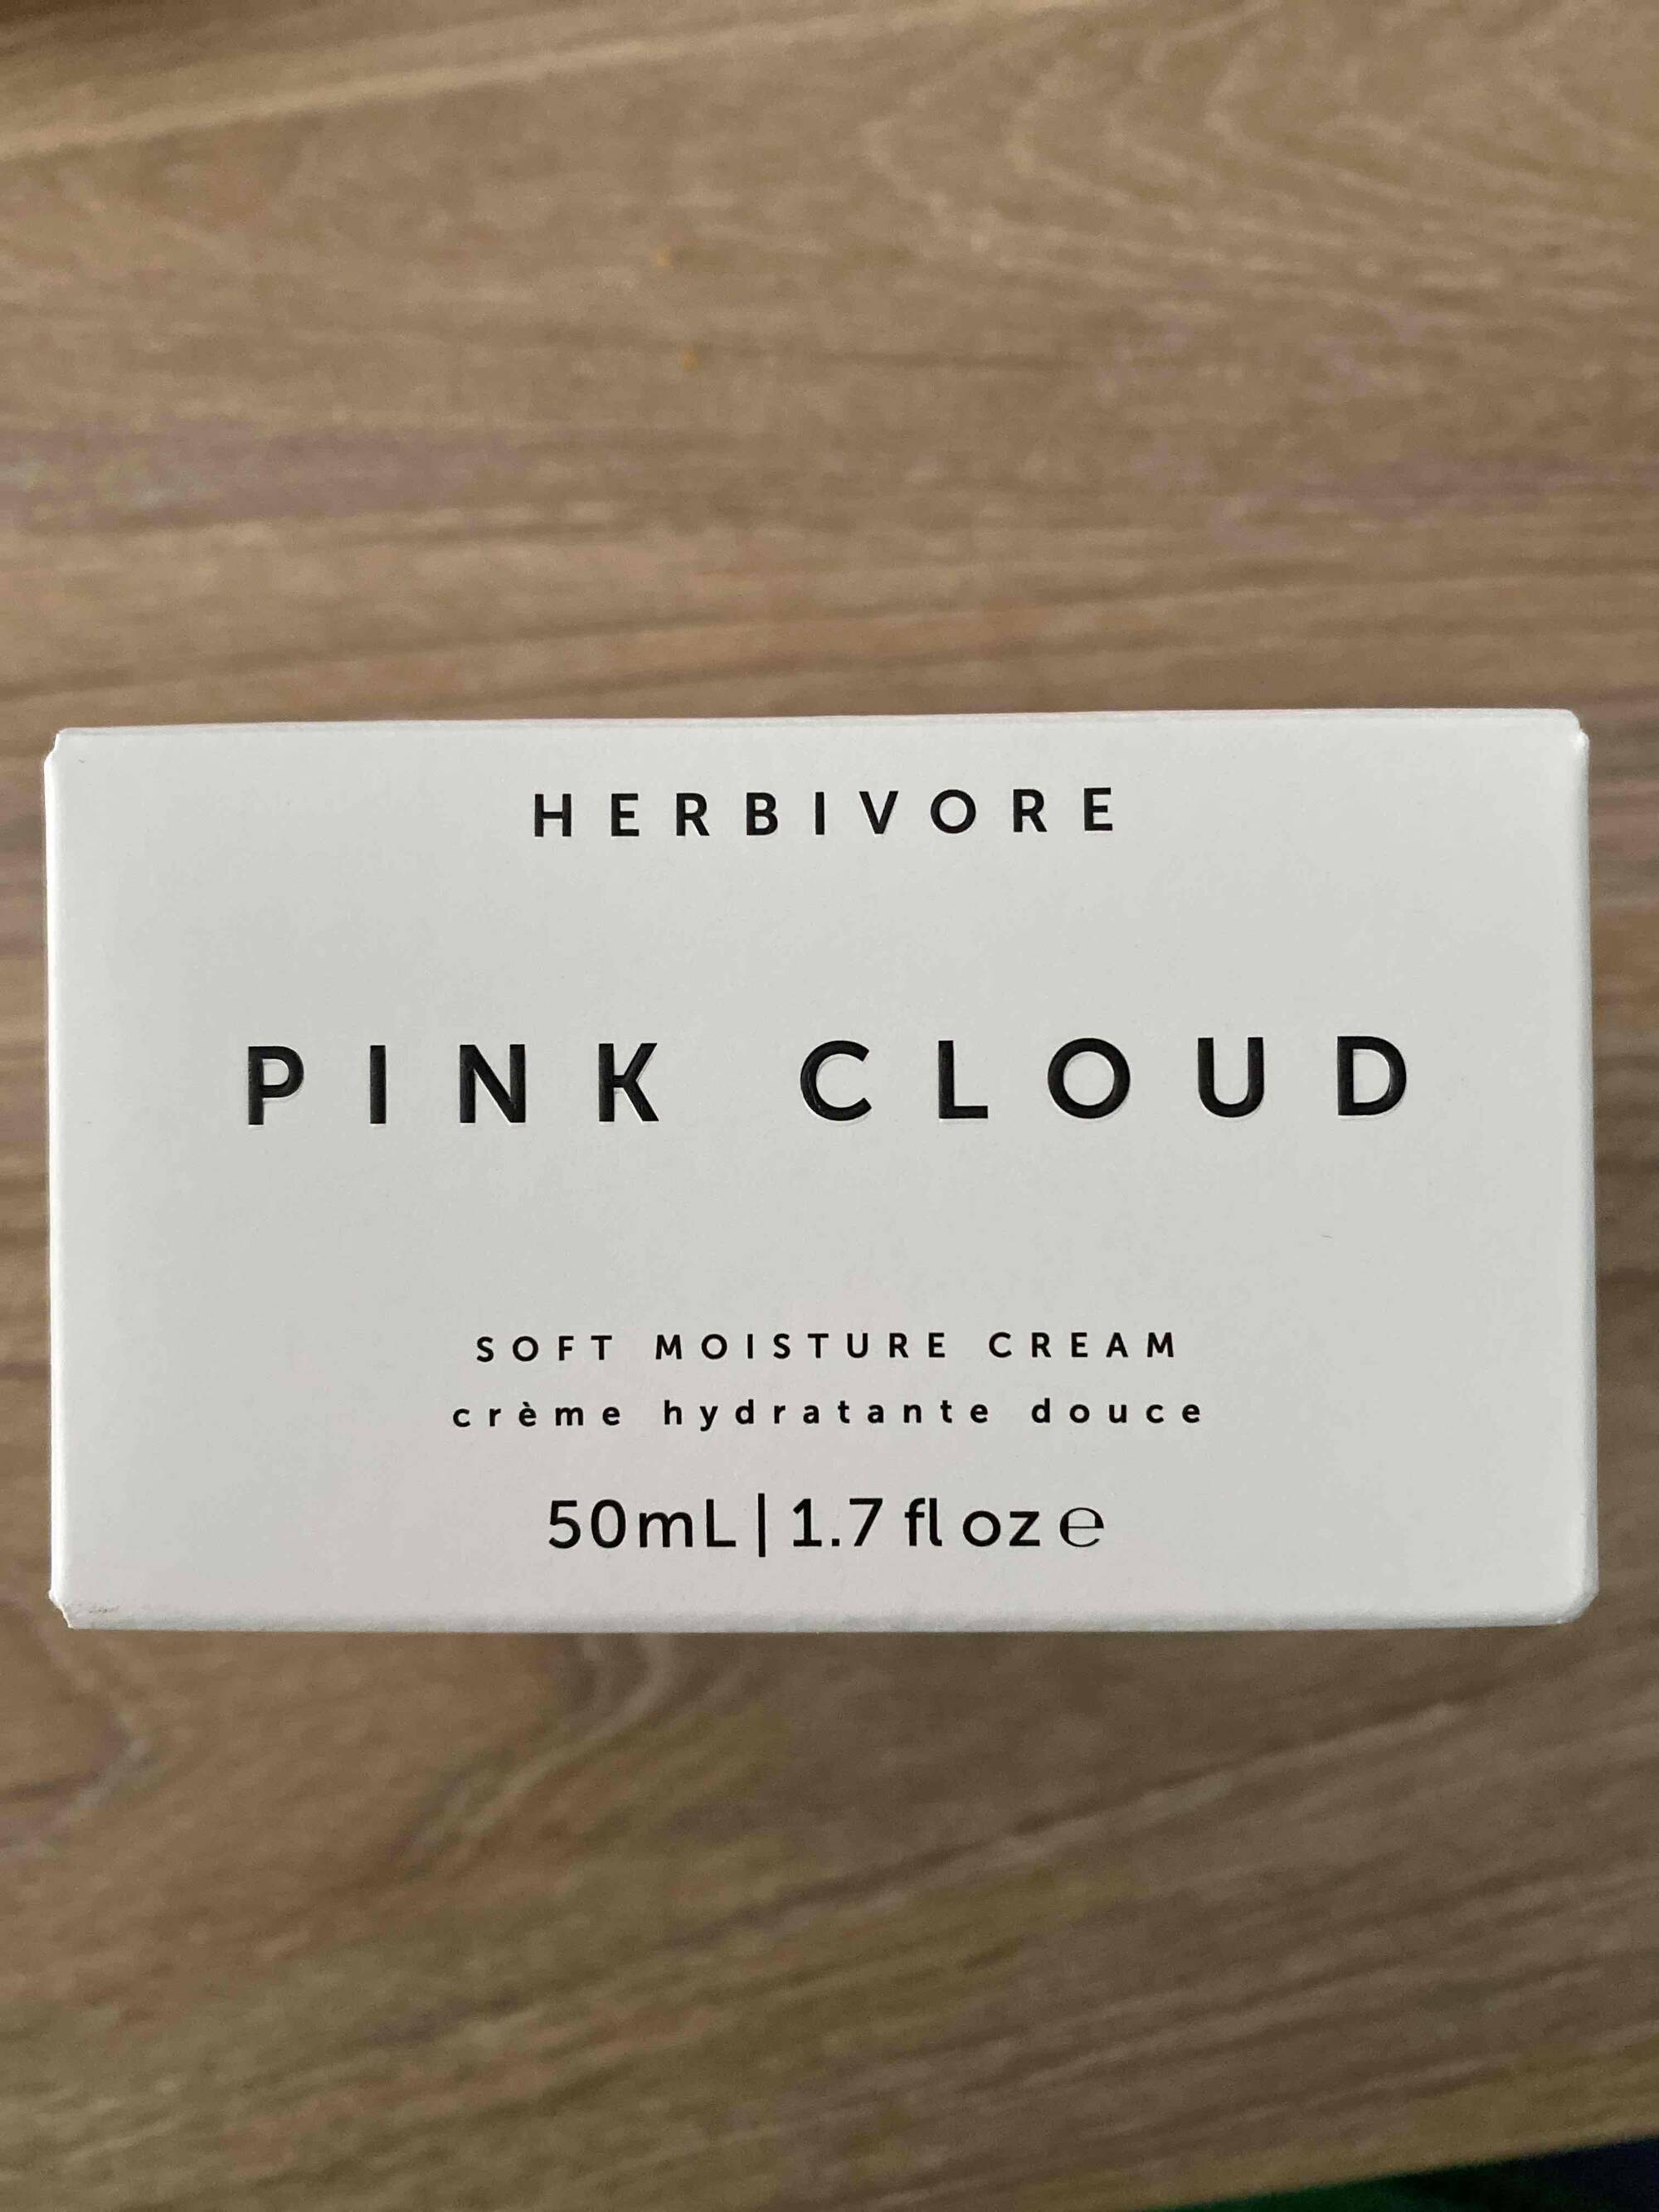 HERBIVORE - Pink cloud soft moisture cream 